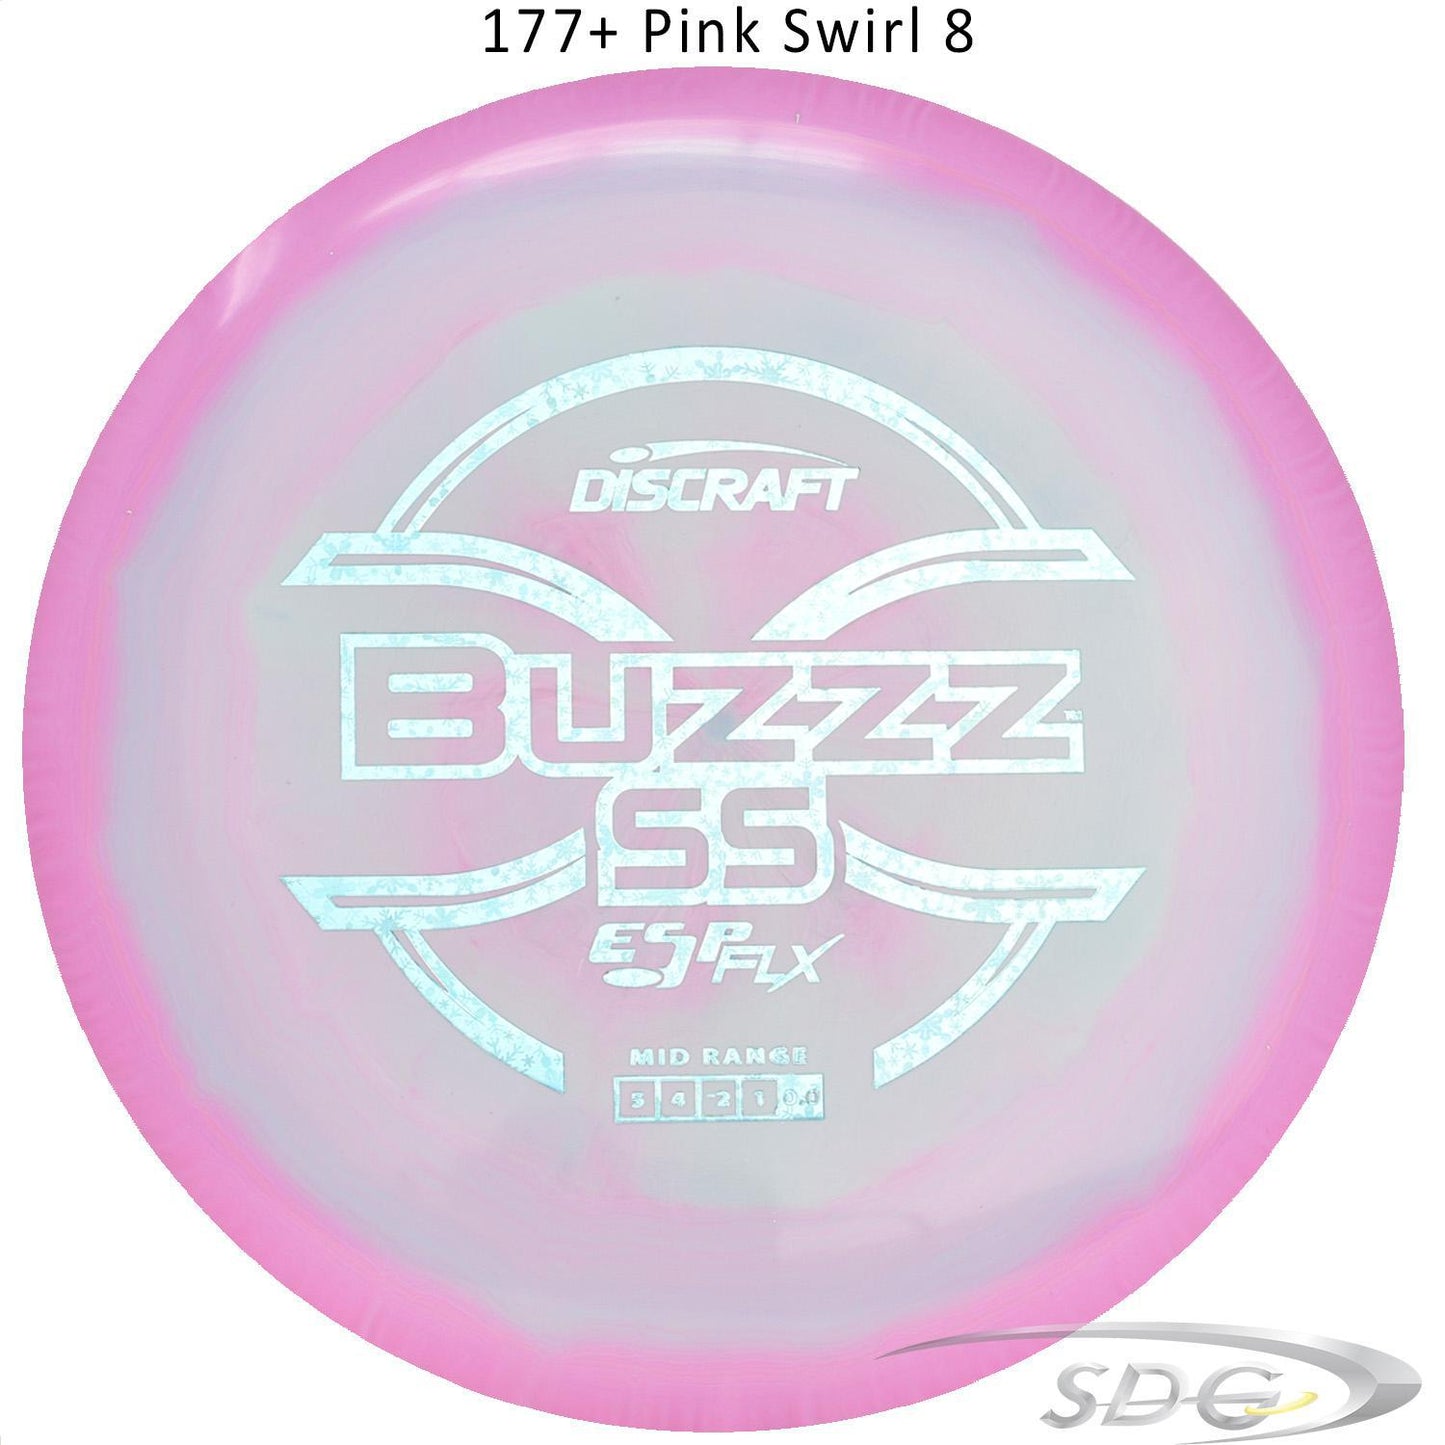 discraft-esp-flx-buzzz-ss-disc-golf-mid-range 177+ Pink Swirl 8